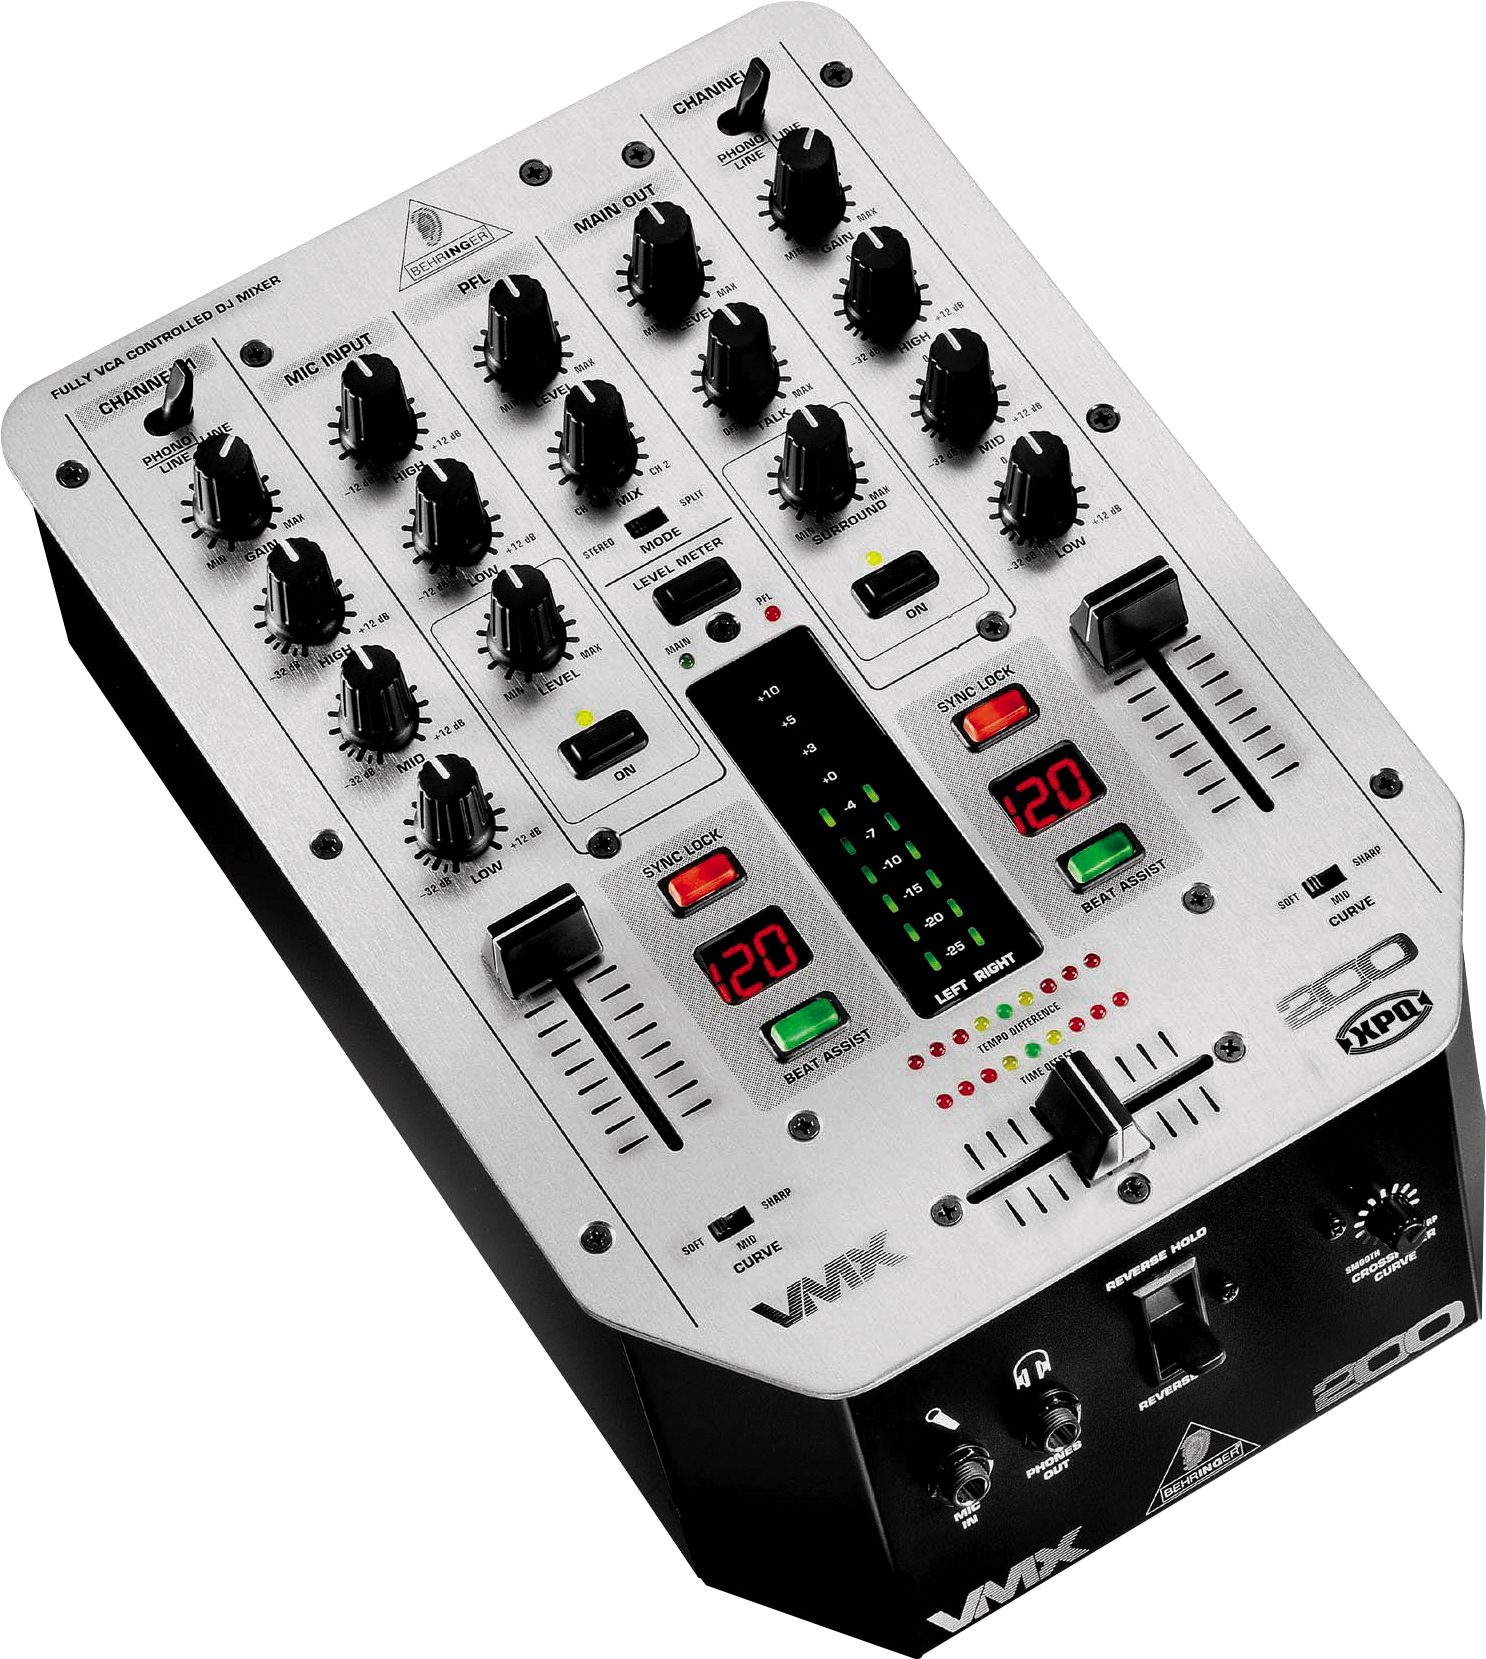 nåde Vilje Kommunist Behringer VMX200 VCA-Controlled 2-Channel Pro DJ Mixer with Beat Counter